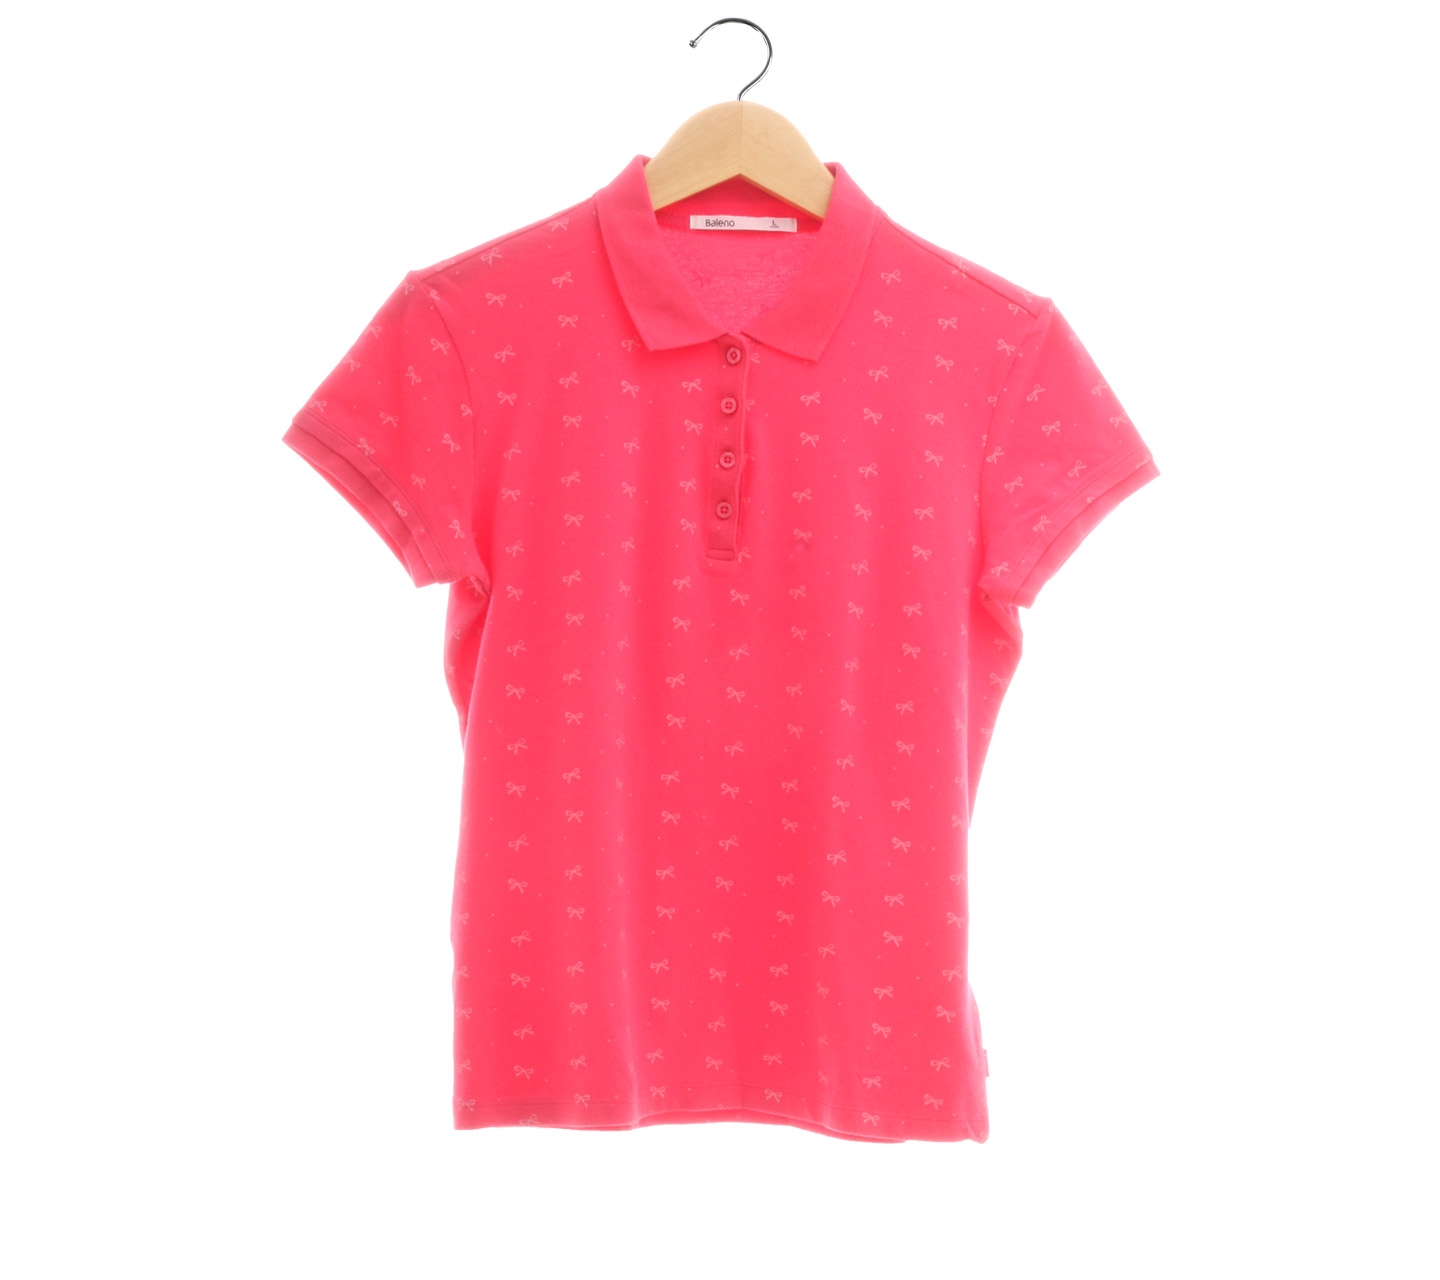 Baleno Pink Polo T-Shirt